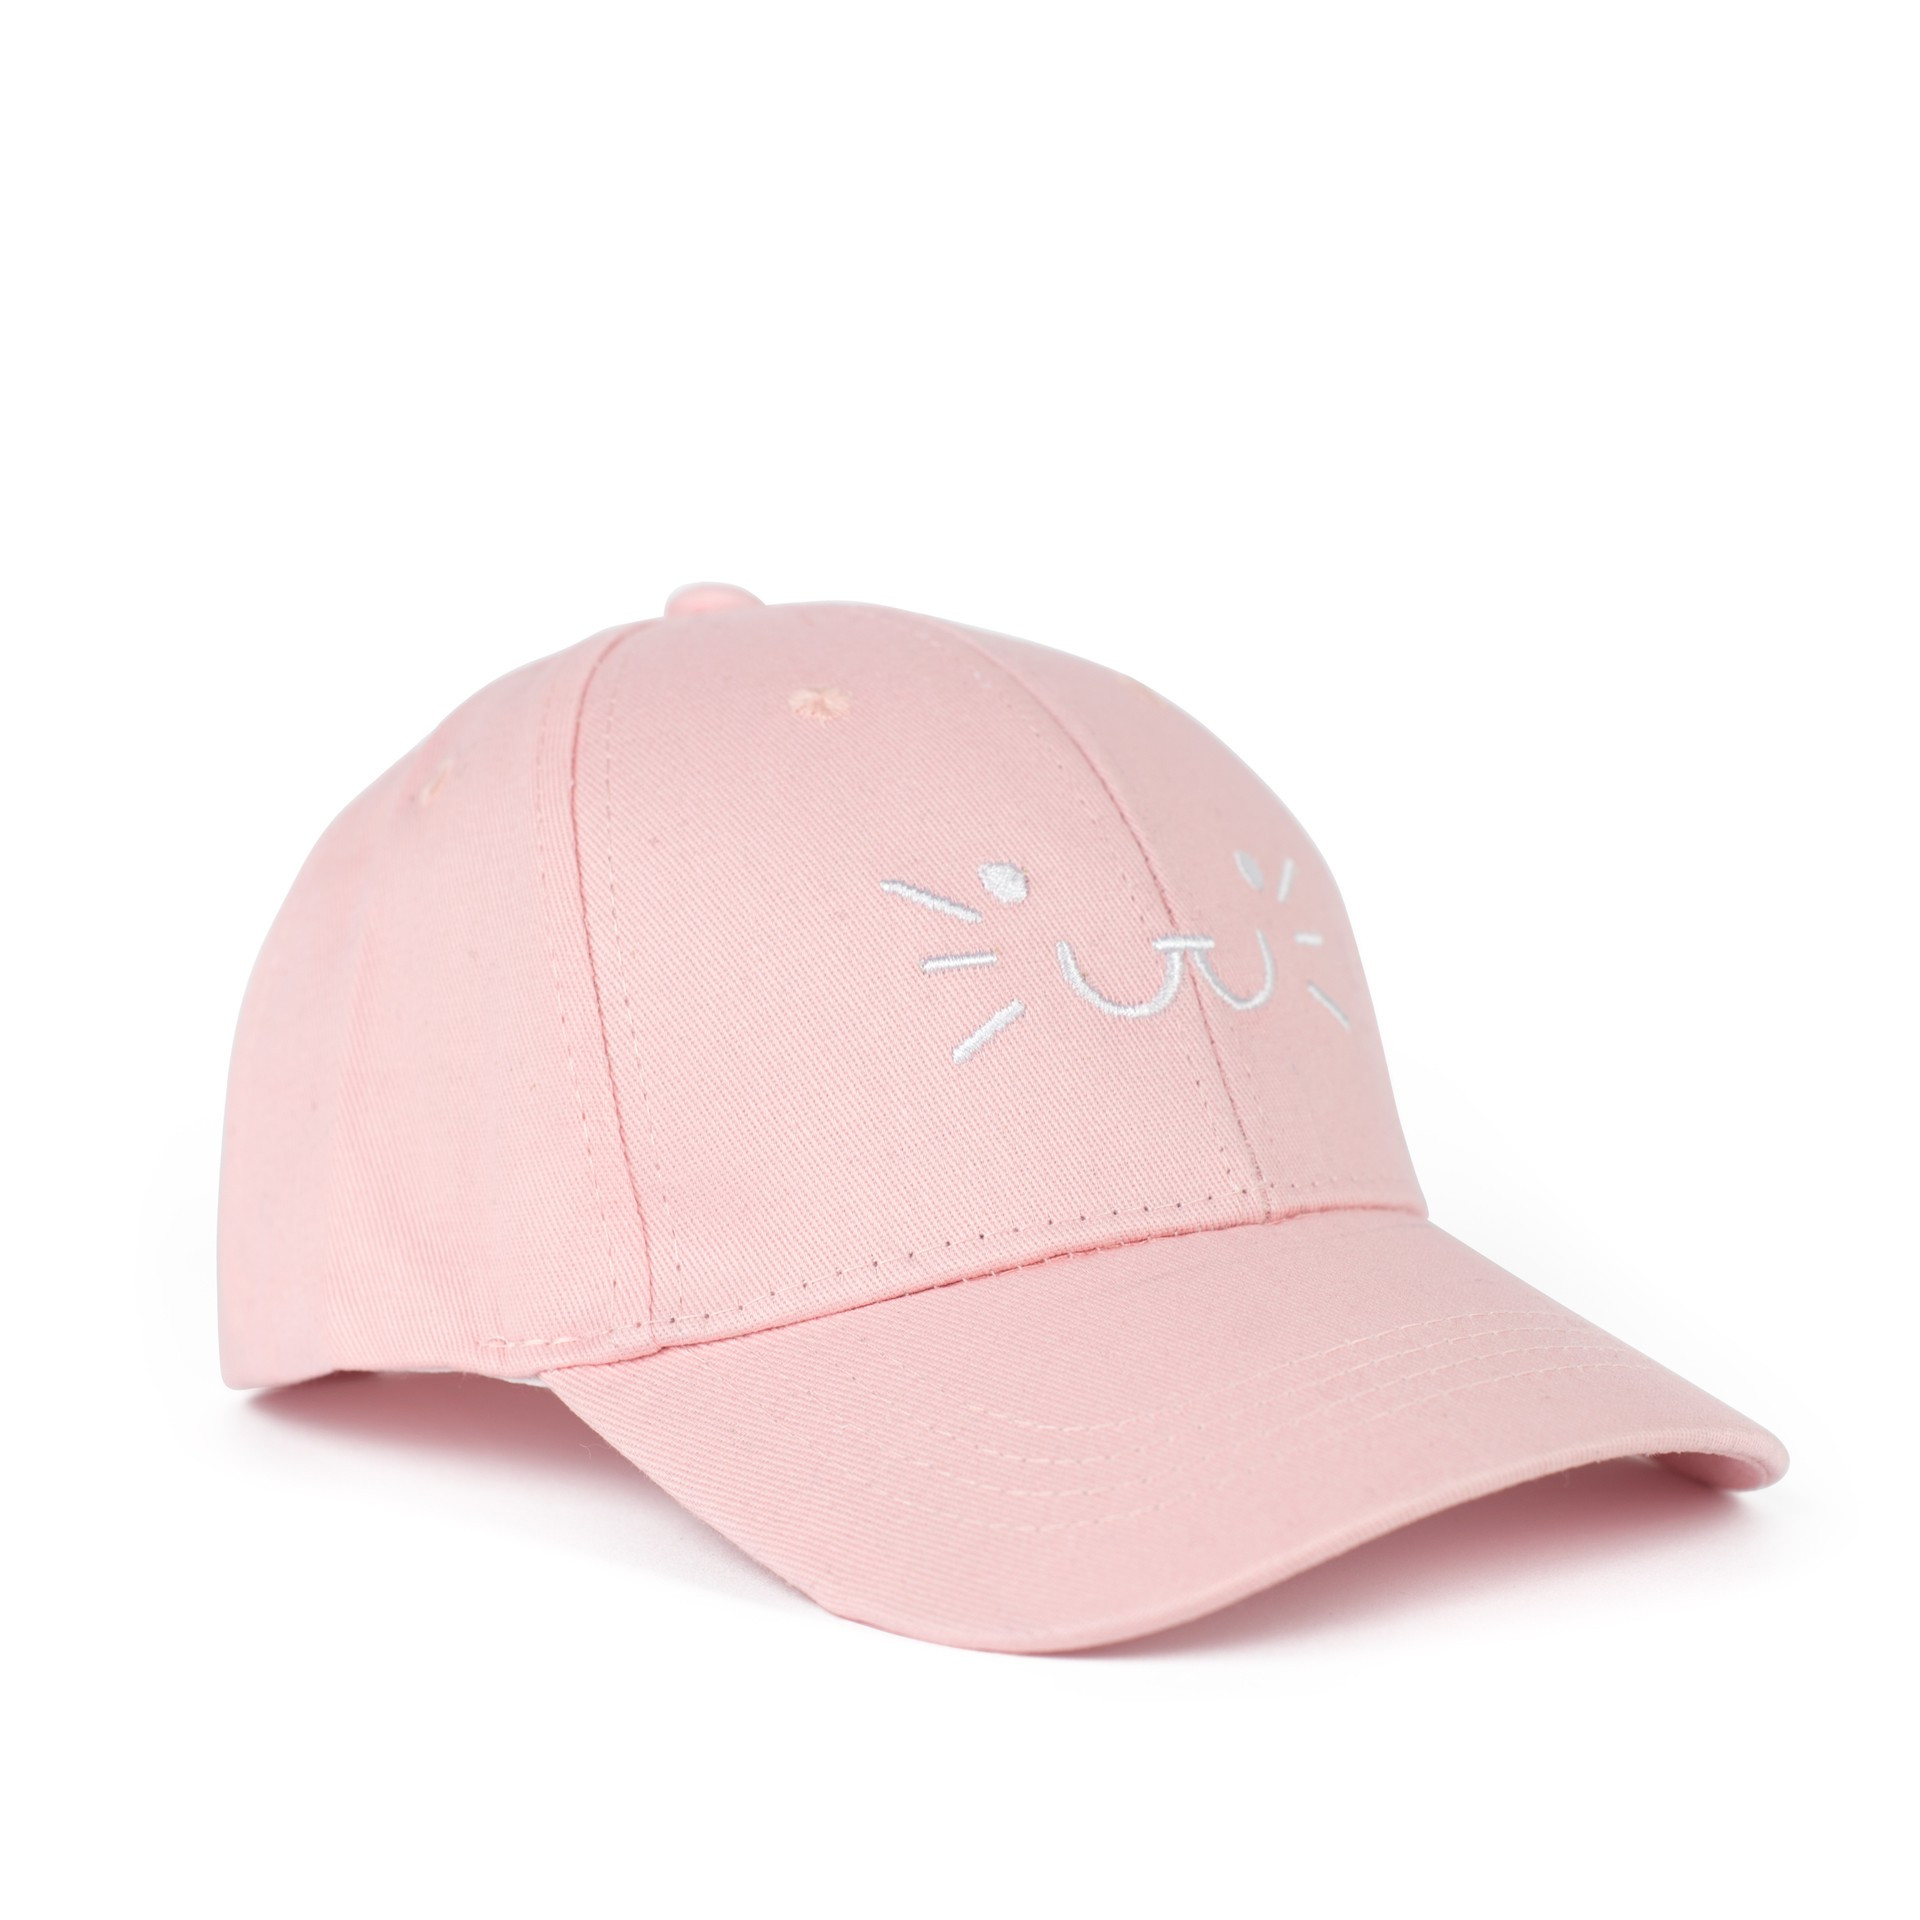 Kšiltovka Hat model 17238260 Light Pink UNI - Art of polo